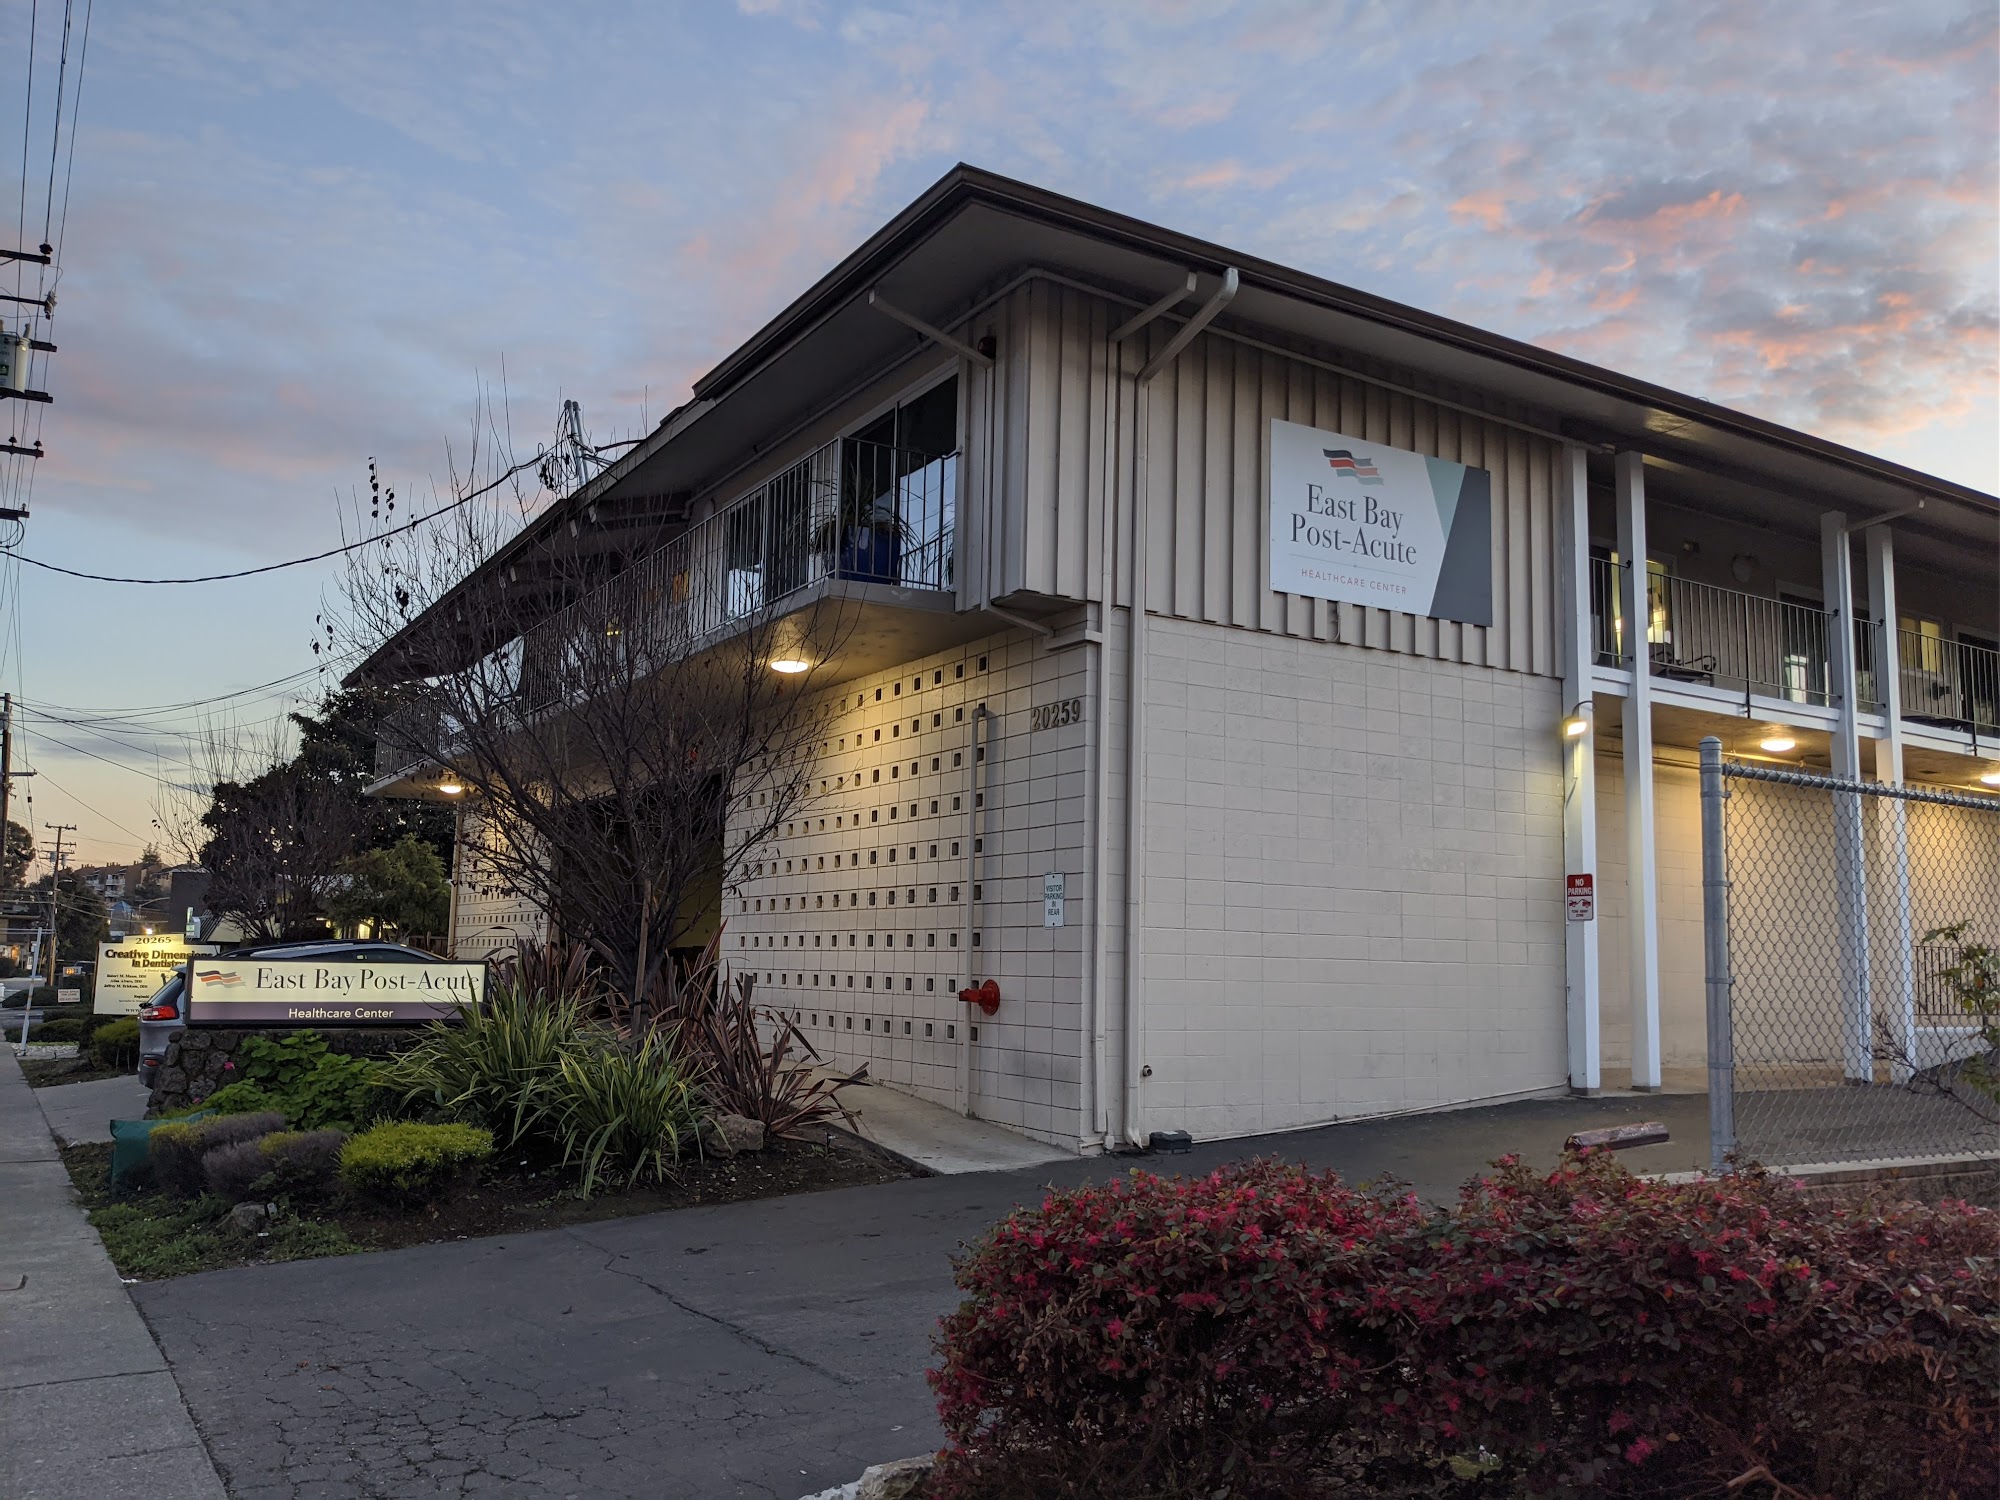 East Bay Post-Acute Healthcare Center